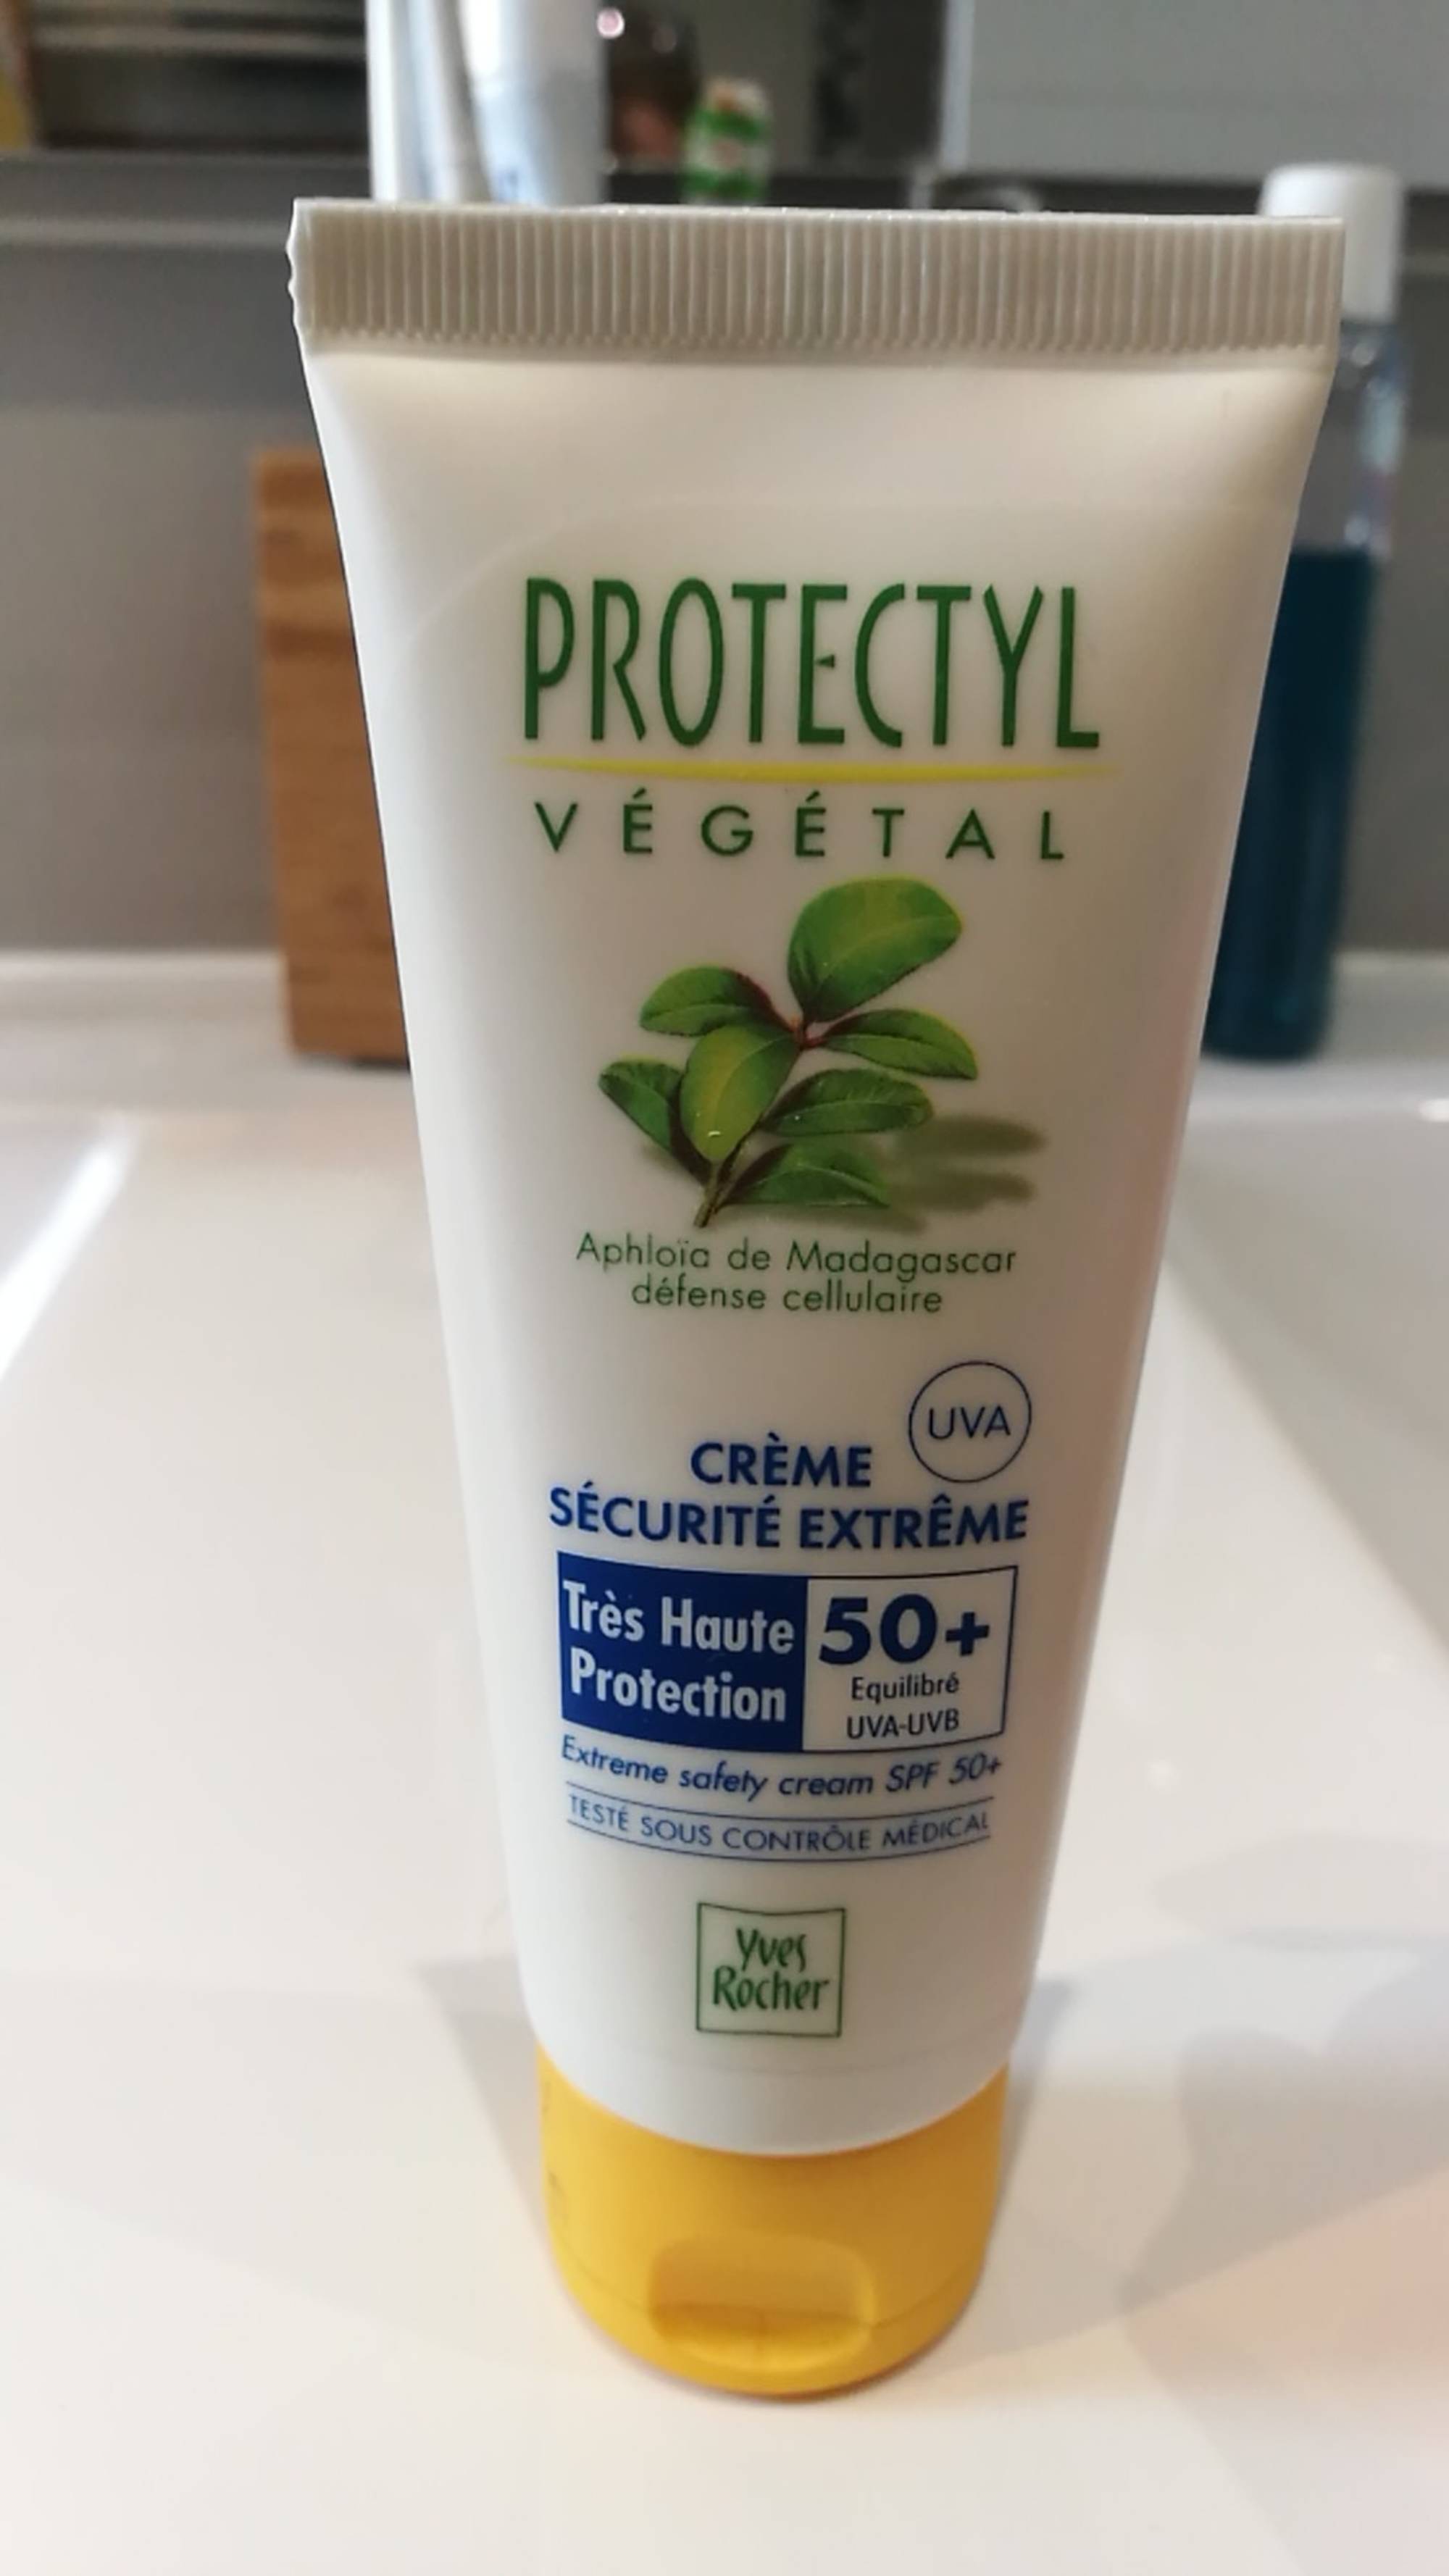 YVES ROCHER - Protectyl végétal - Crème sécurité extrême spf 50+